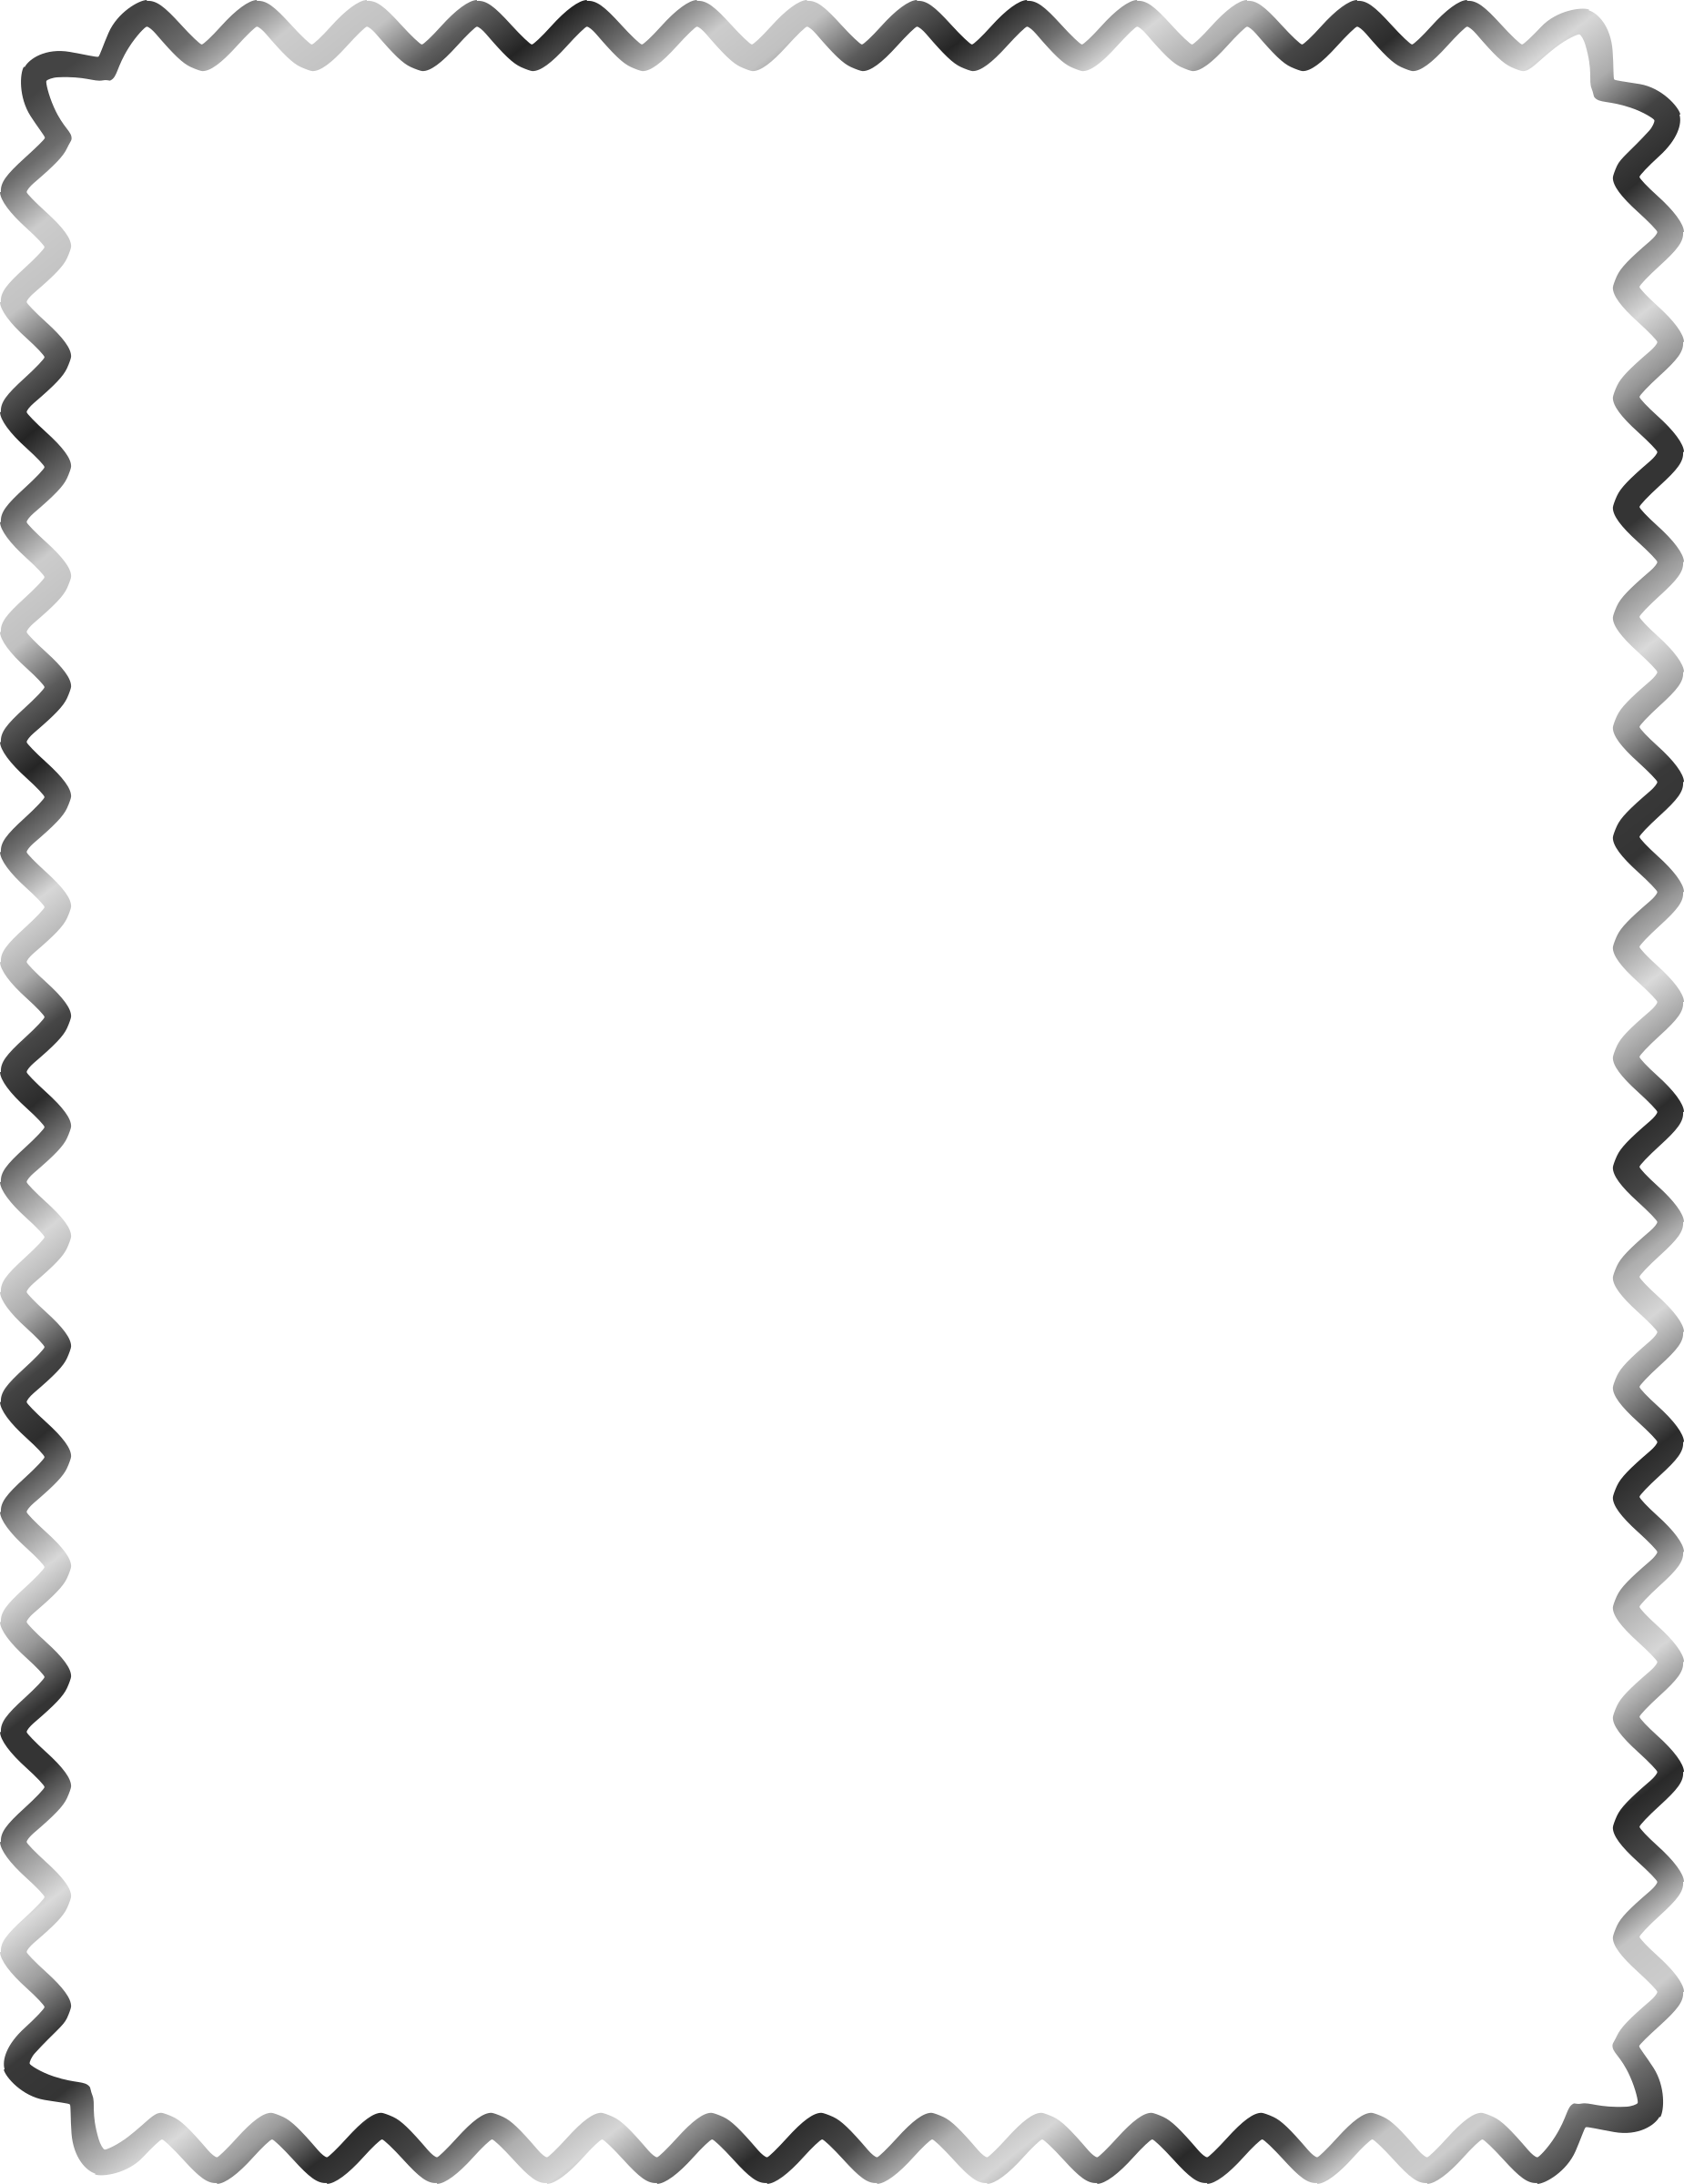 Sine border big image. Clipart wave black and white